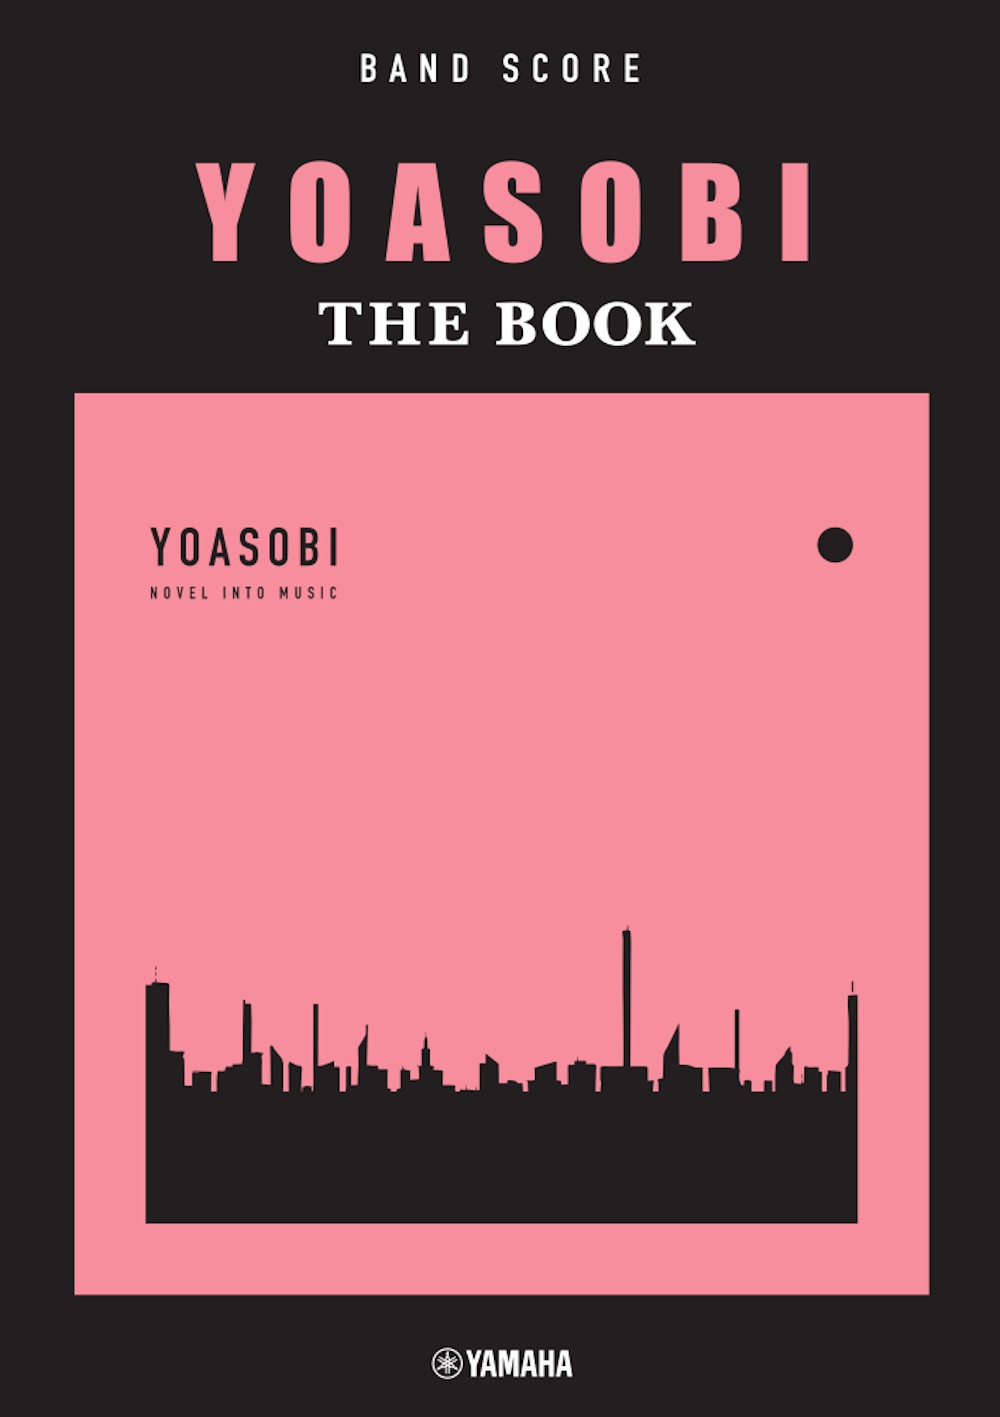 YOASOBI/THE BOOK